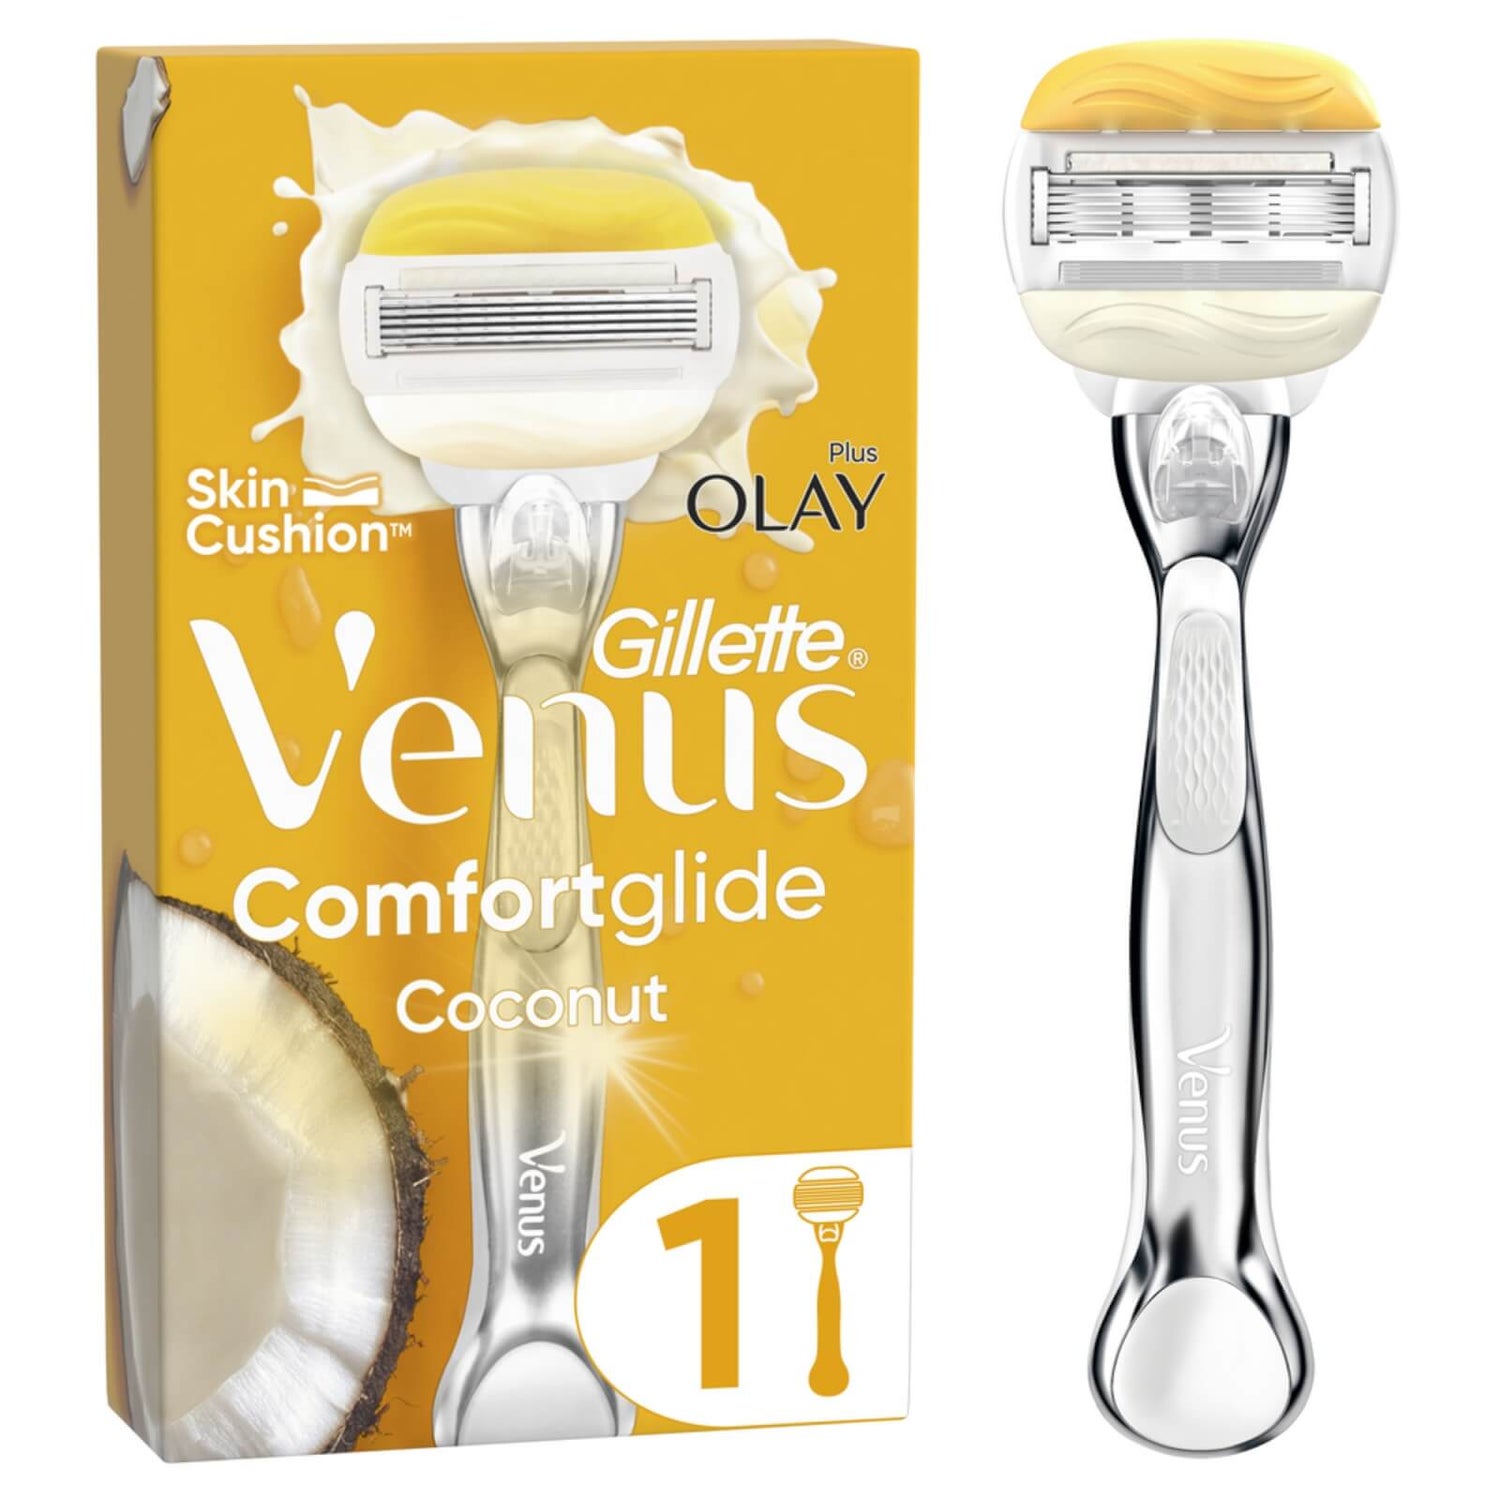 Venus ComfortGlide Coconut with Olay Platinum Handle